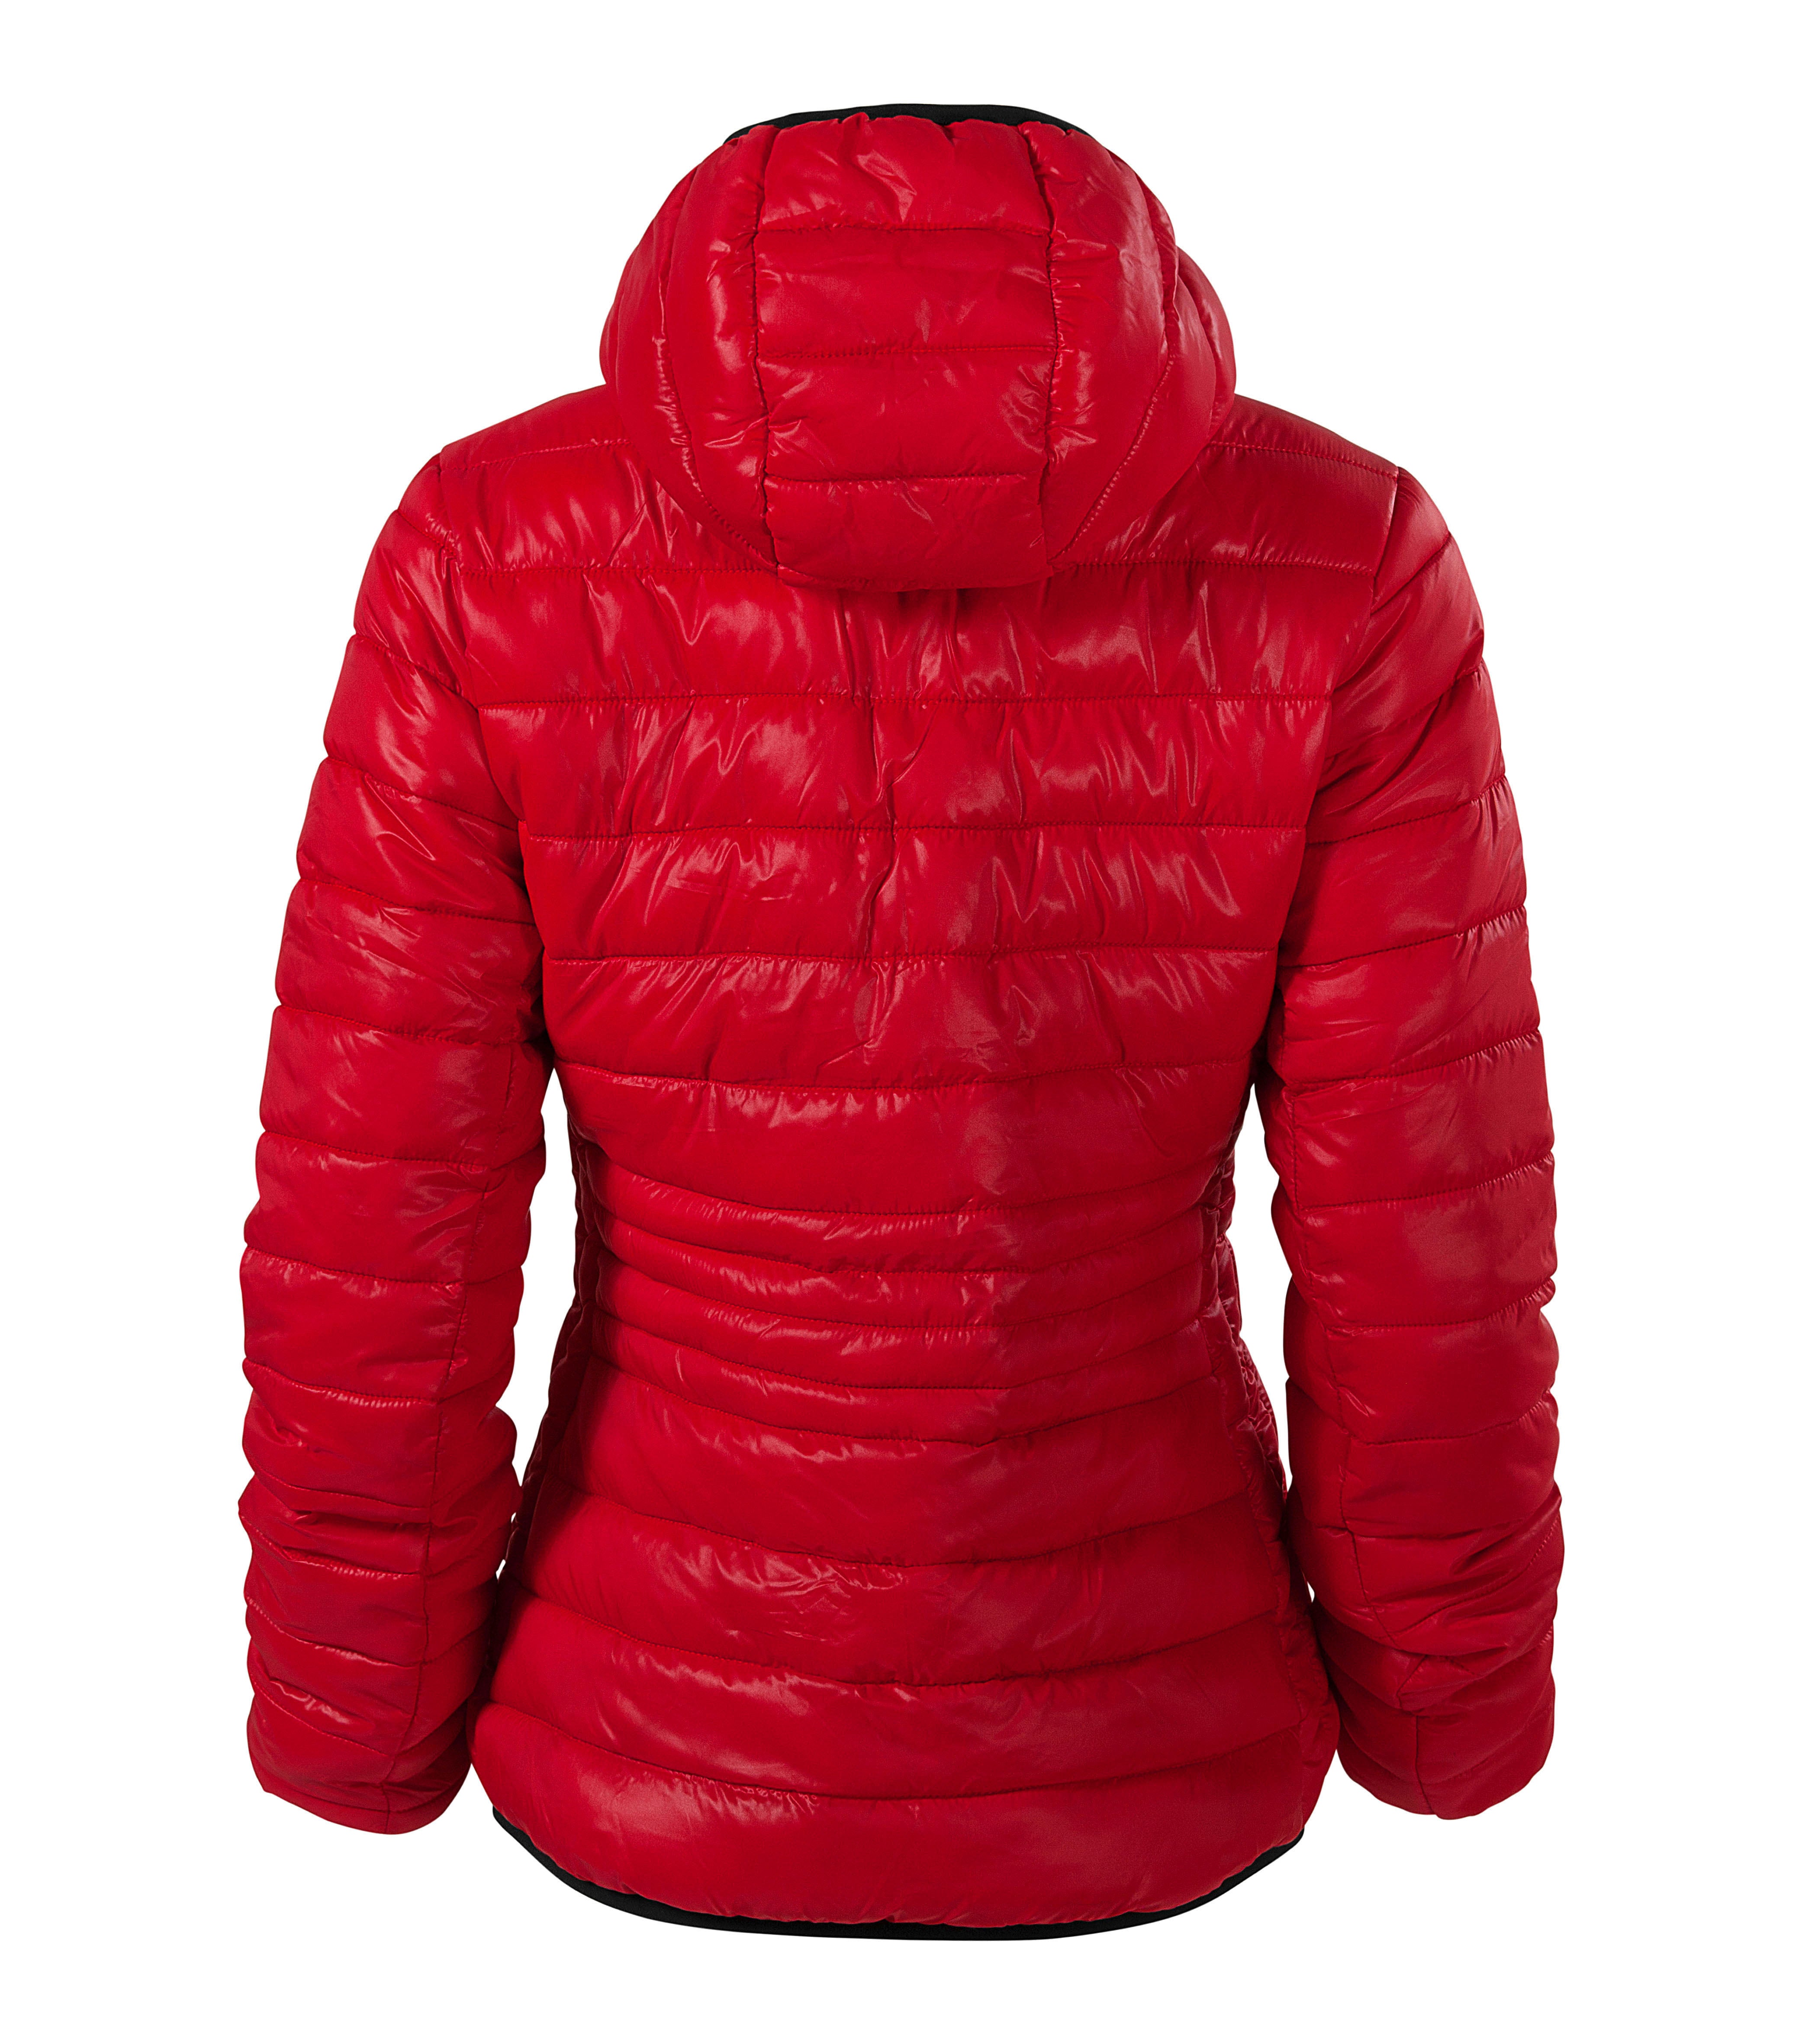 Everest jacket